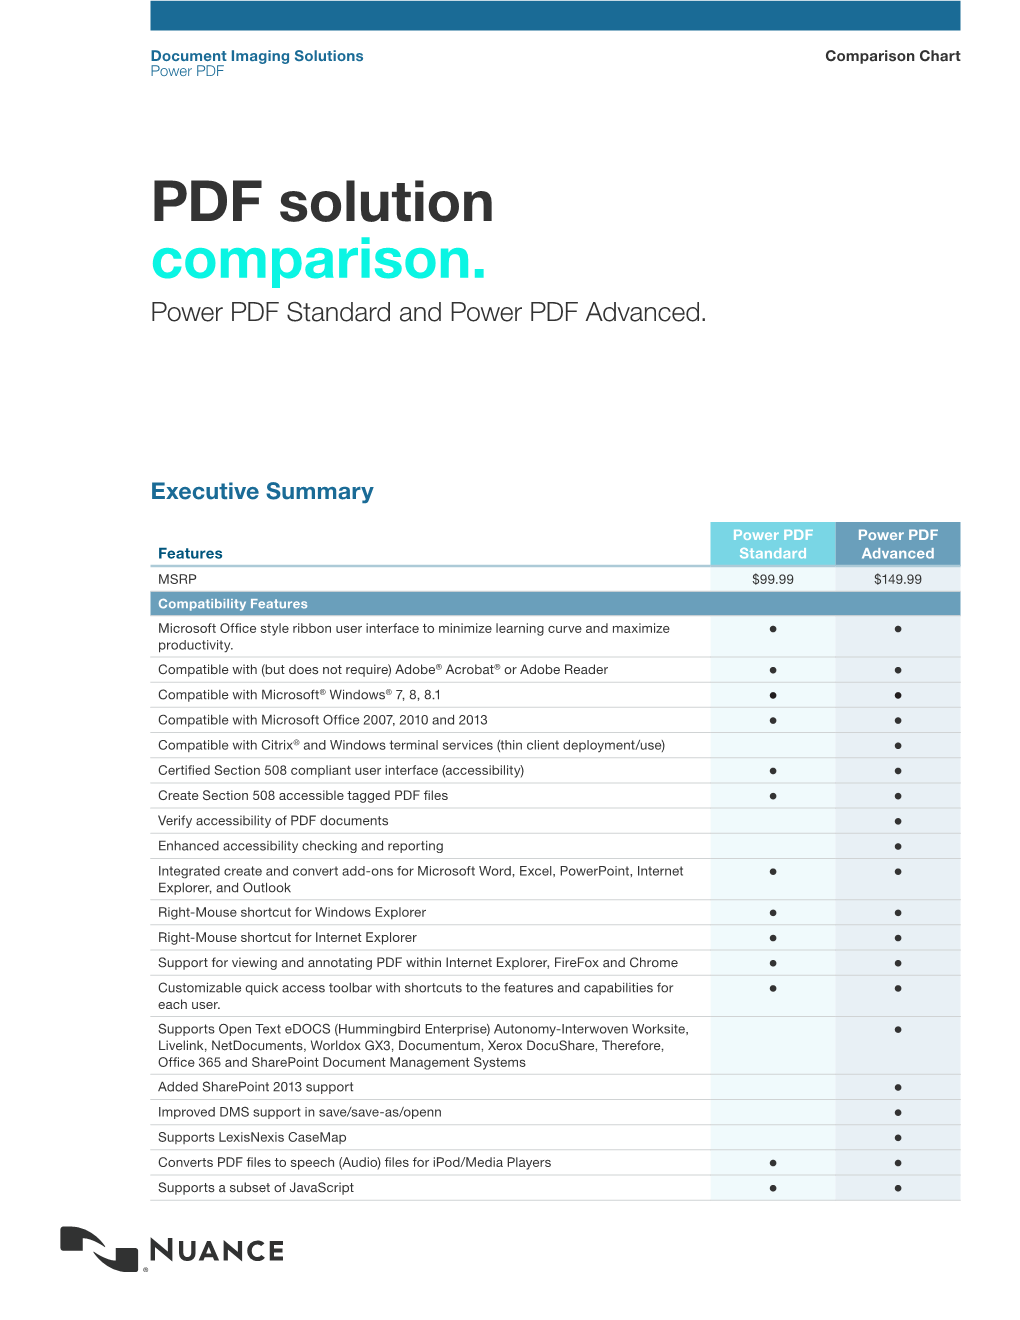 Nuance Power PDF Standard and Advanced Comparison Sheet